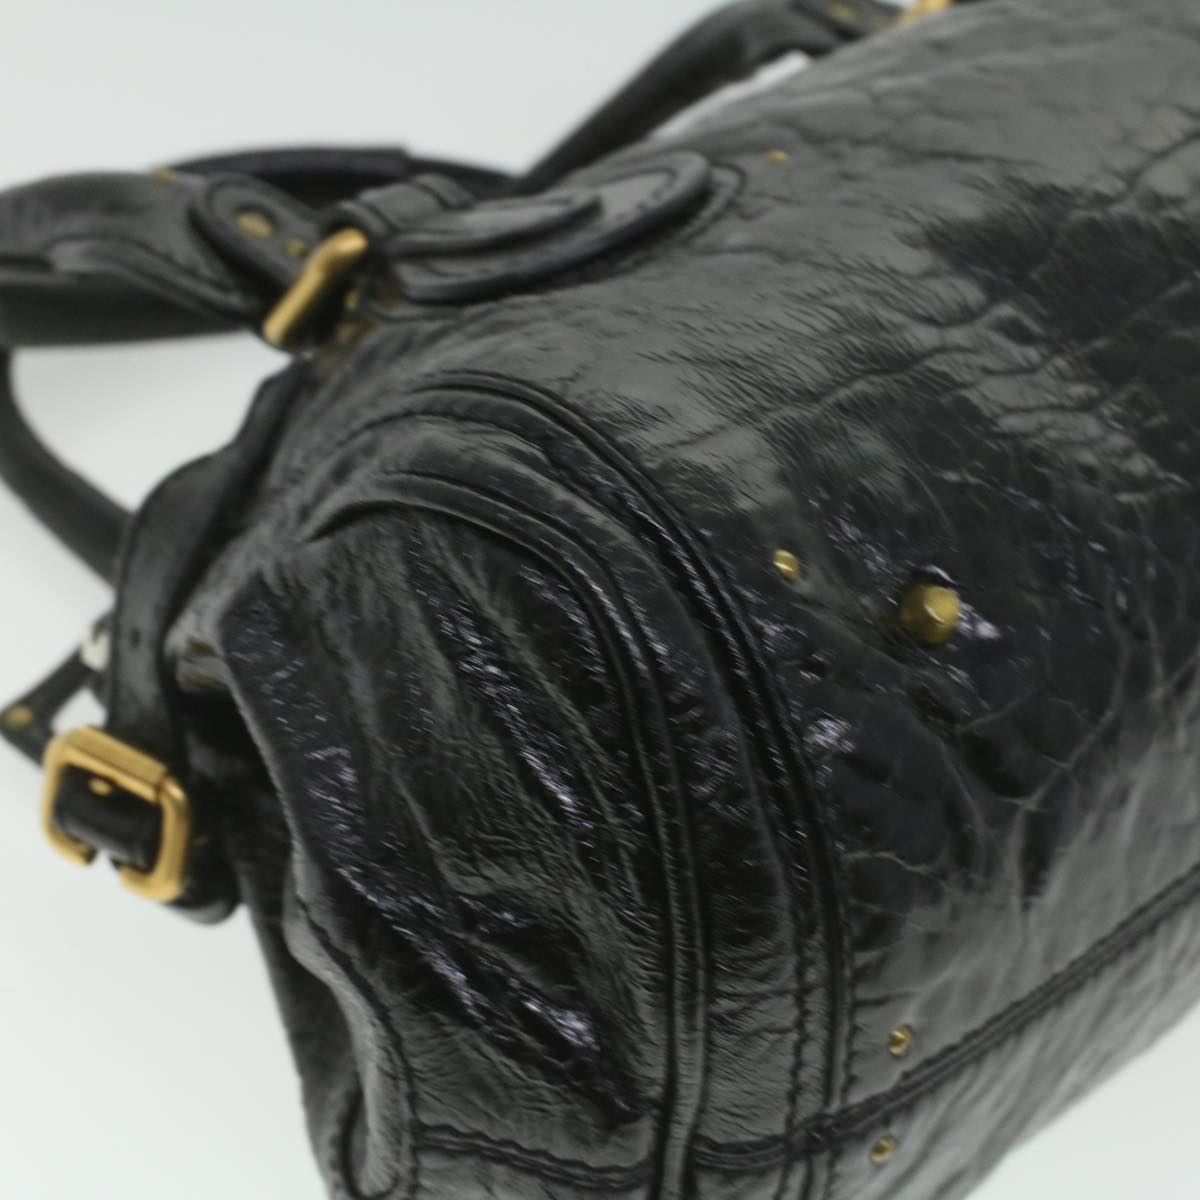 Chloe Paddington Hand Bag Leather Black 04-08-51-5191 Auth 37274